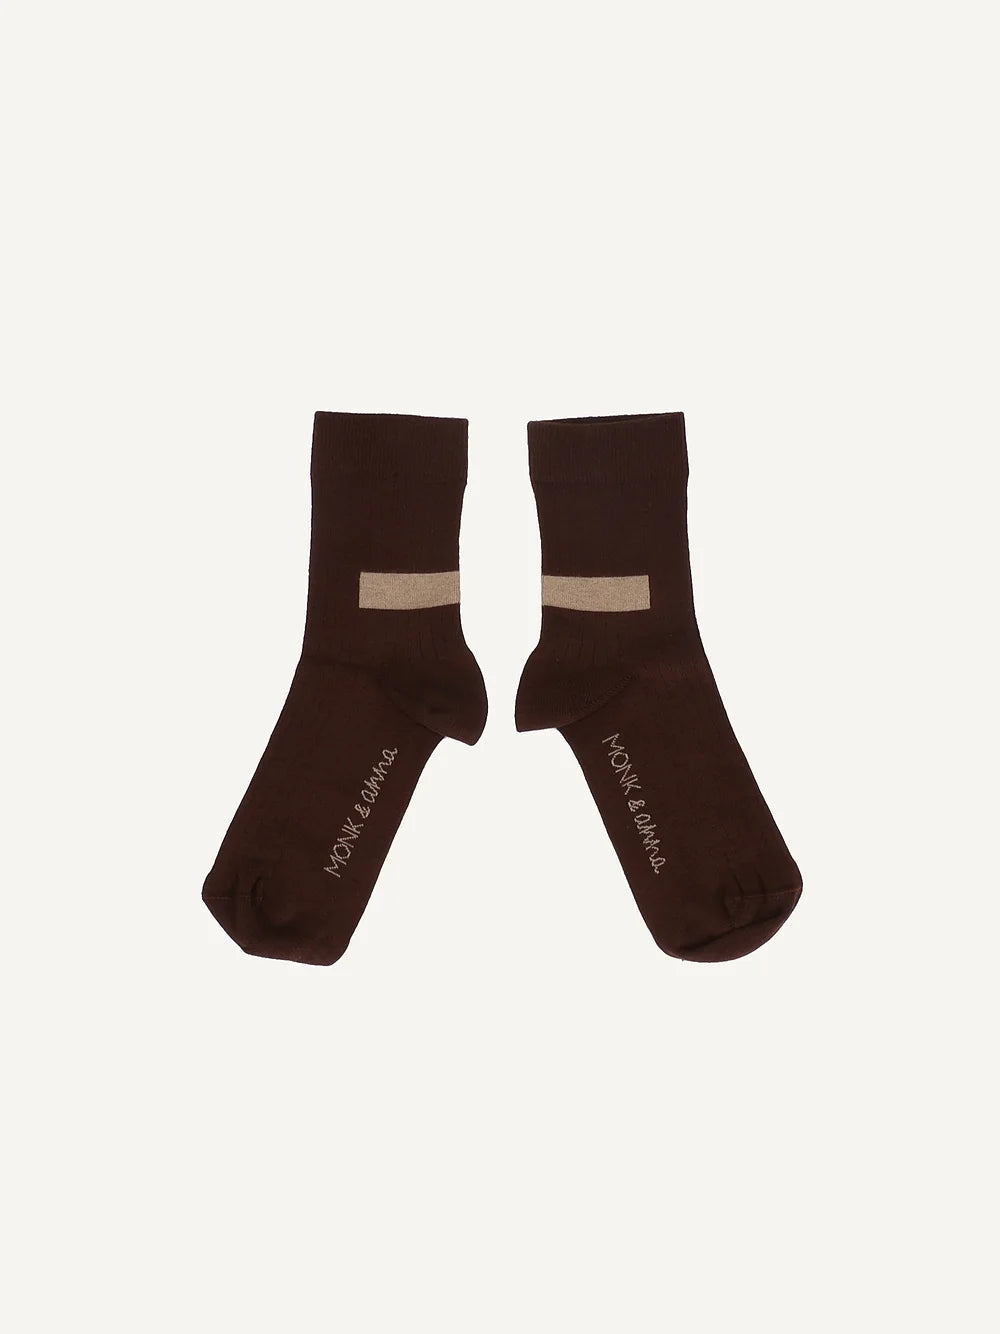 Socks - Graphic Shape - Dark Wood